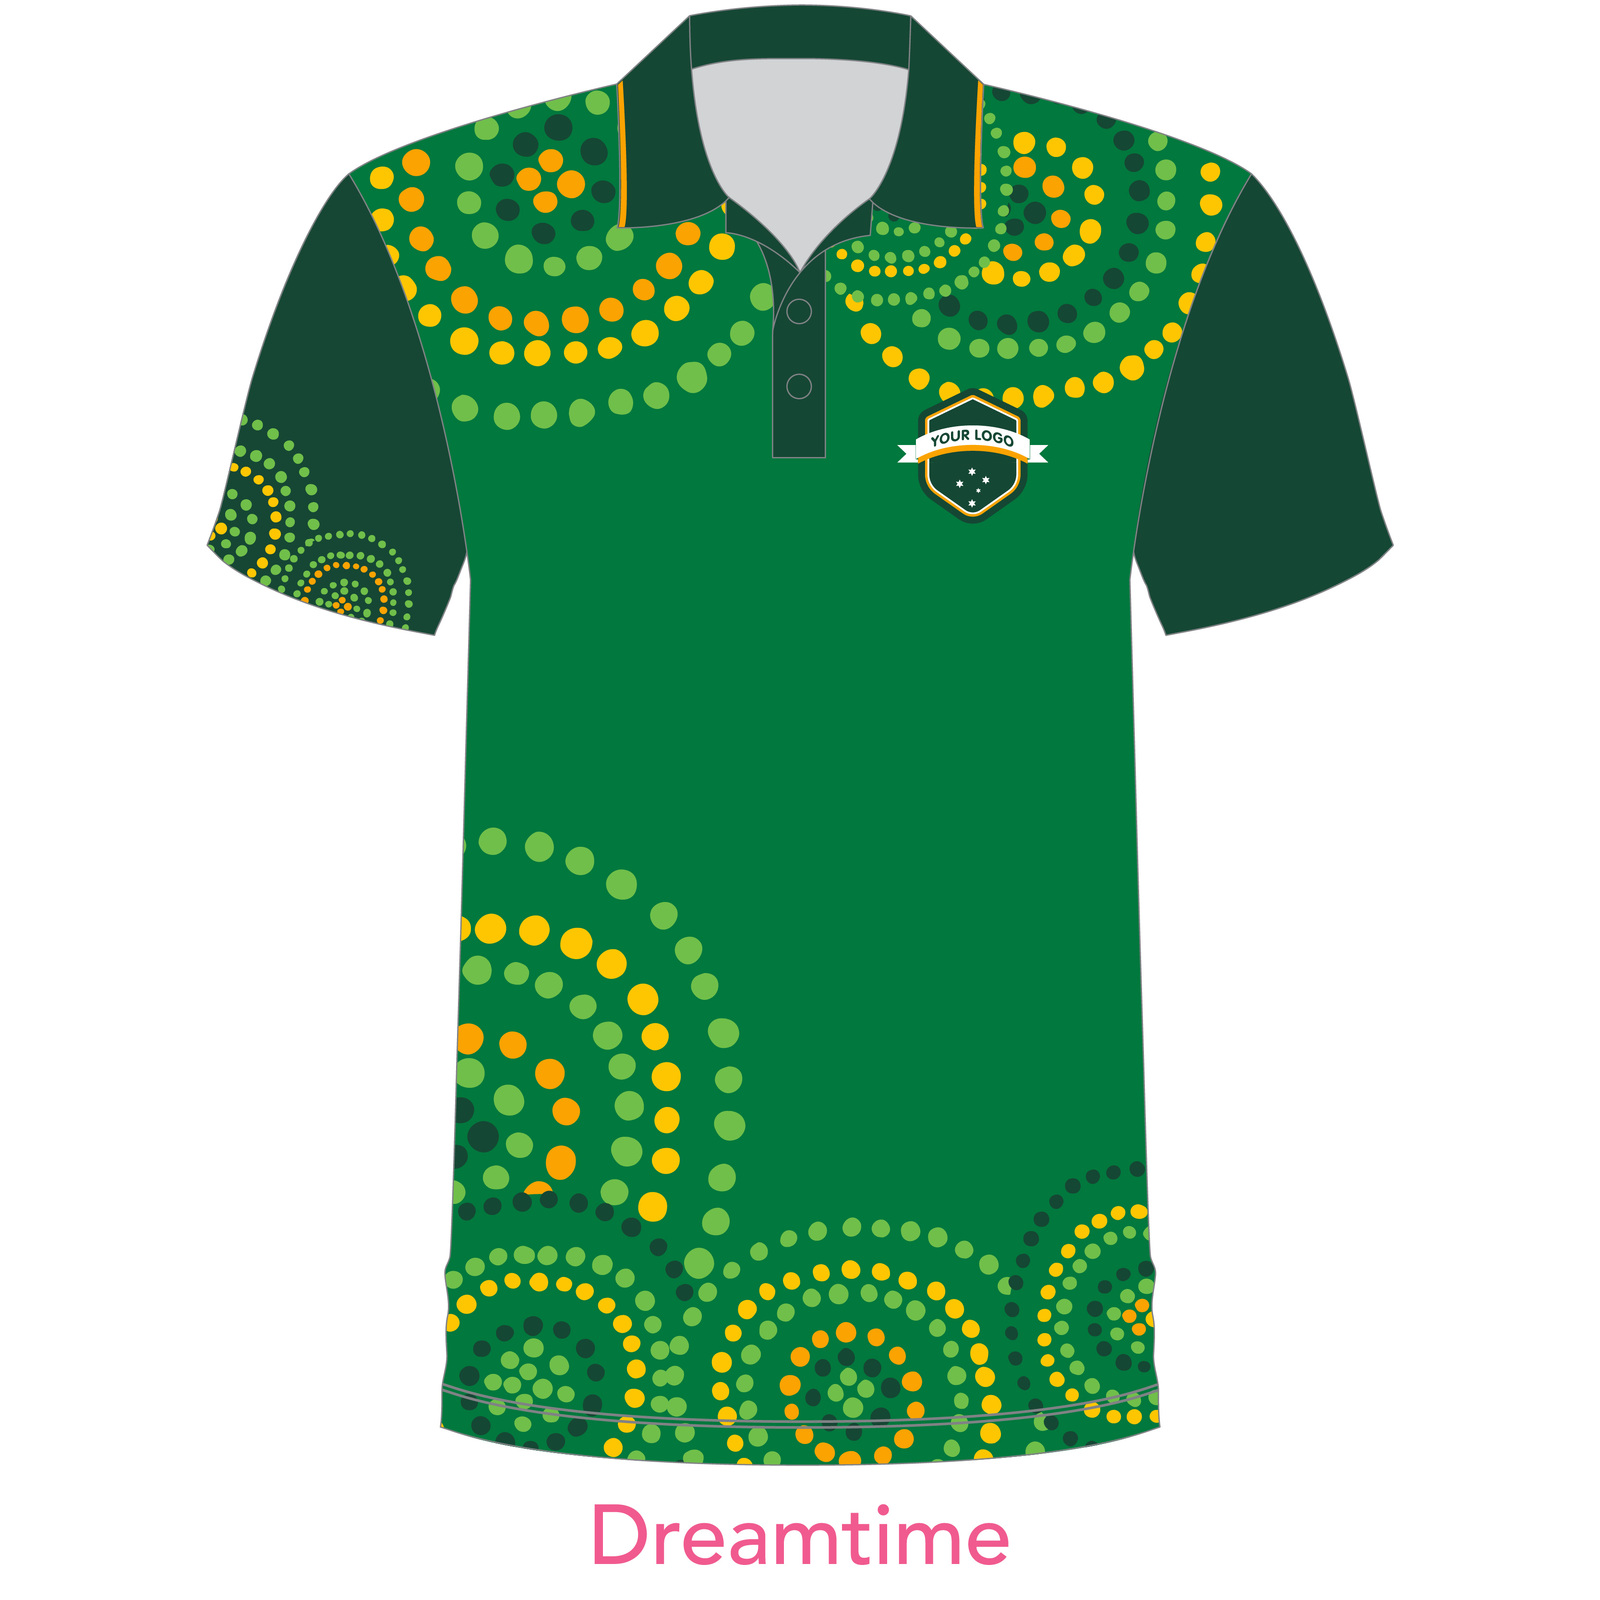 Customised Shirt - Dreamtime